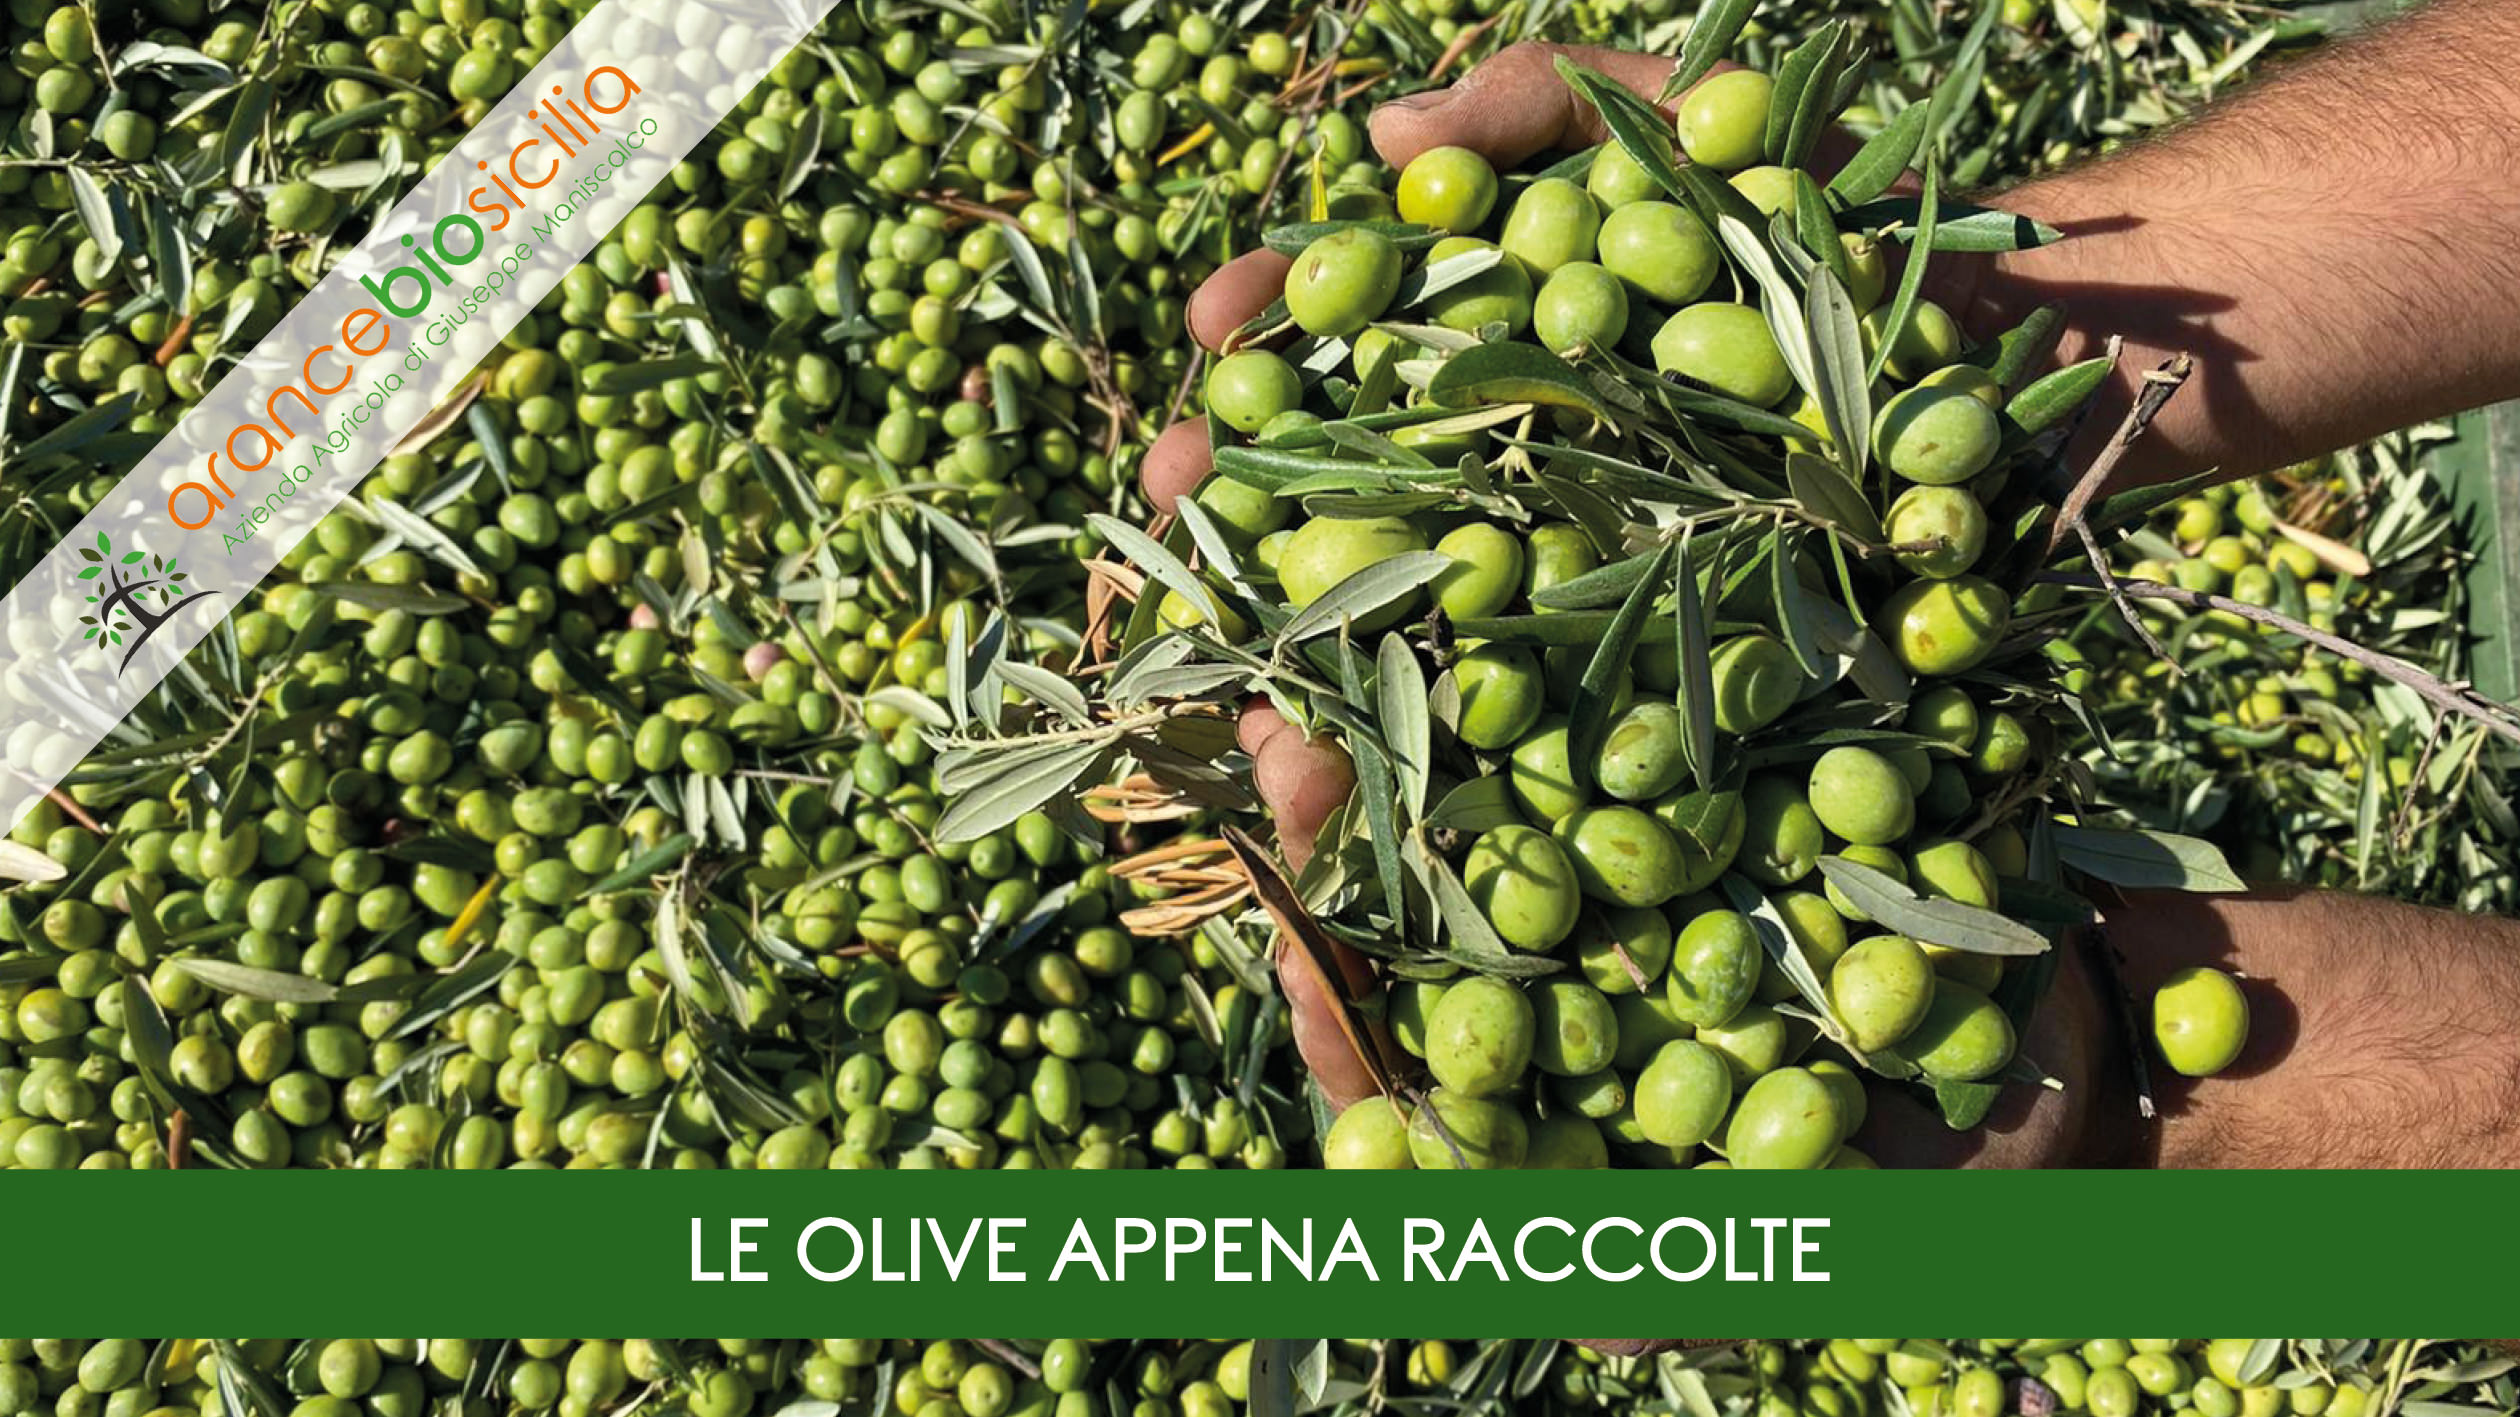 Le olive appena raccolte